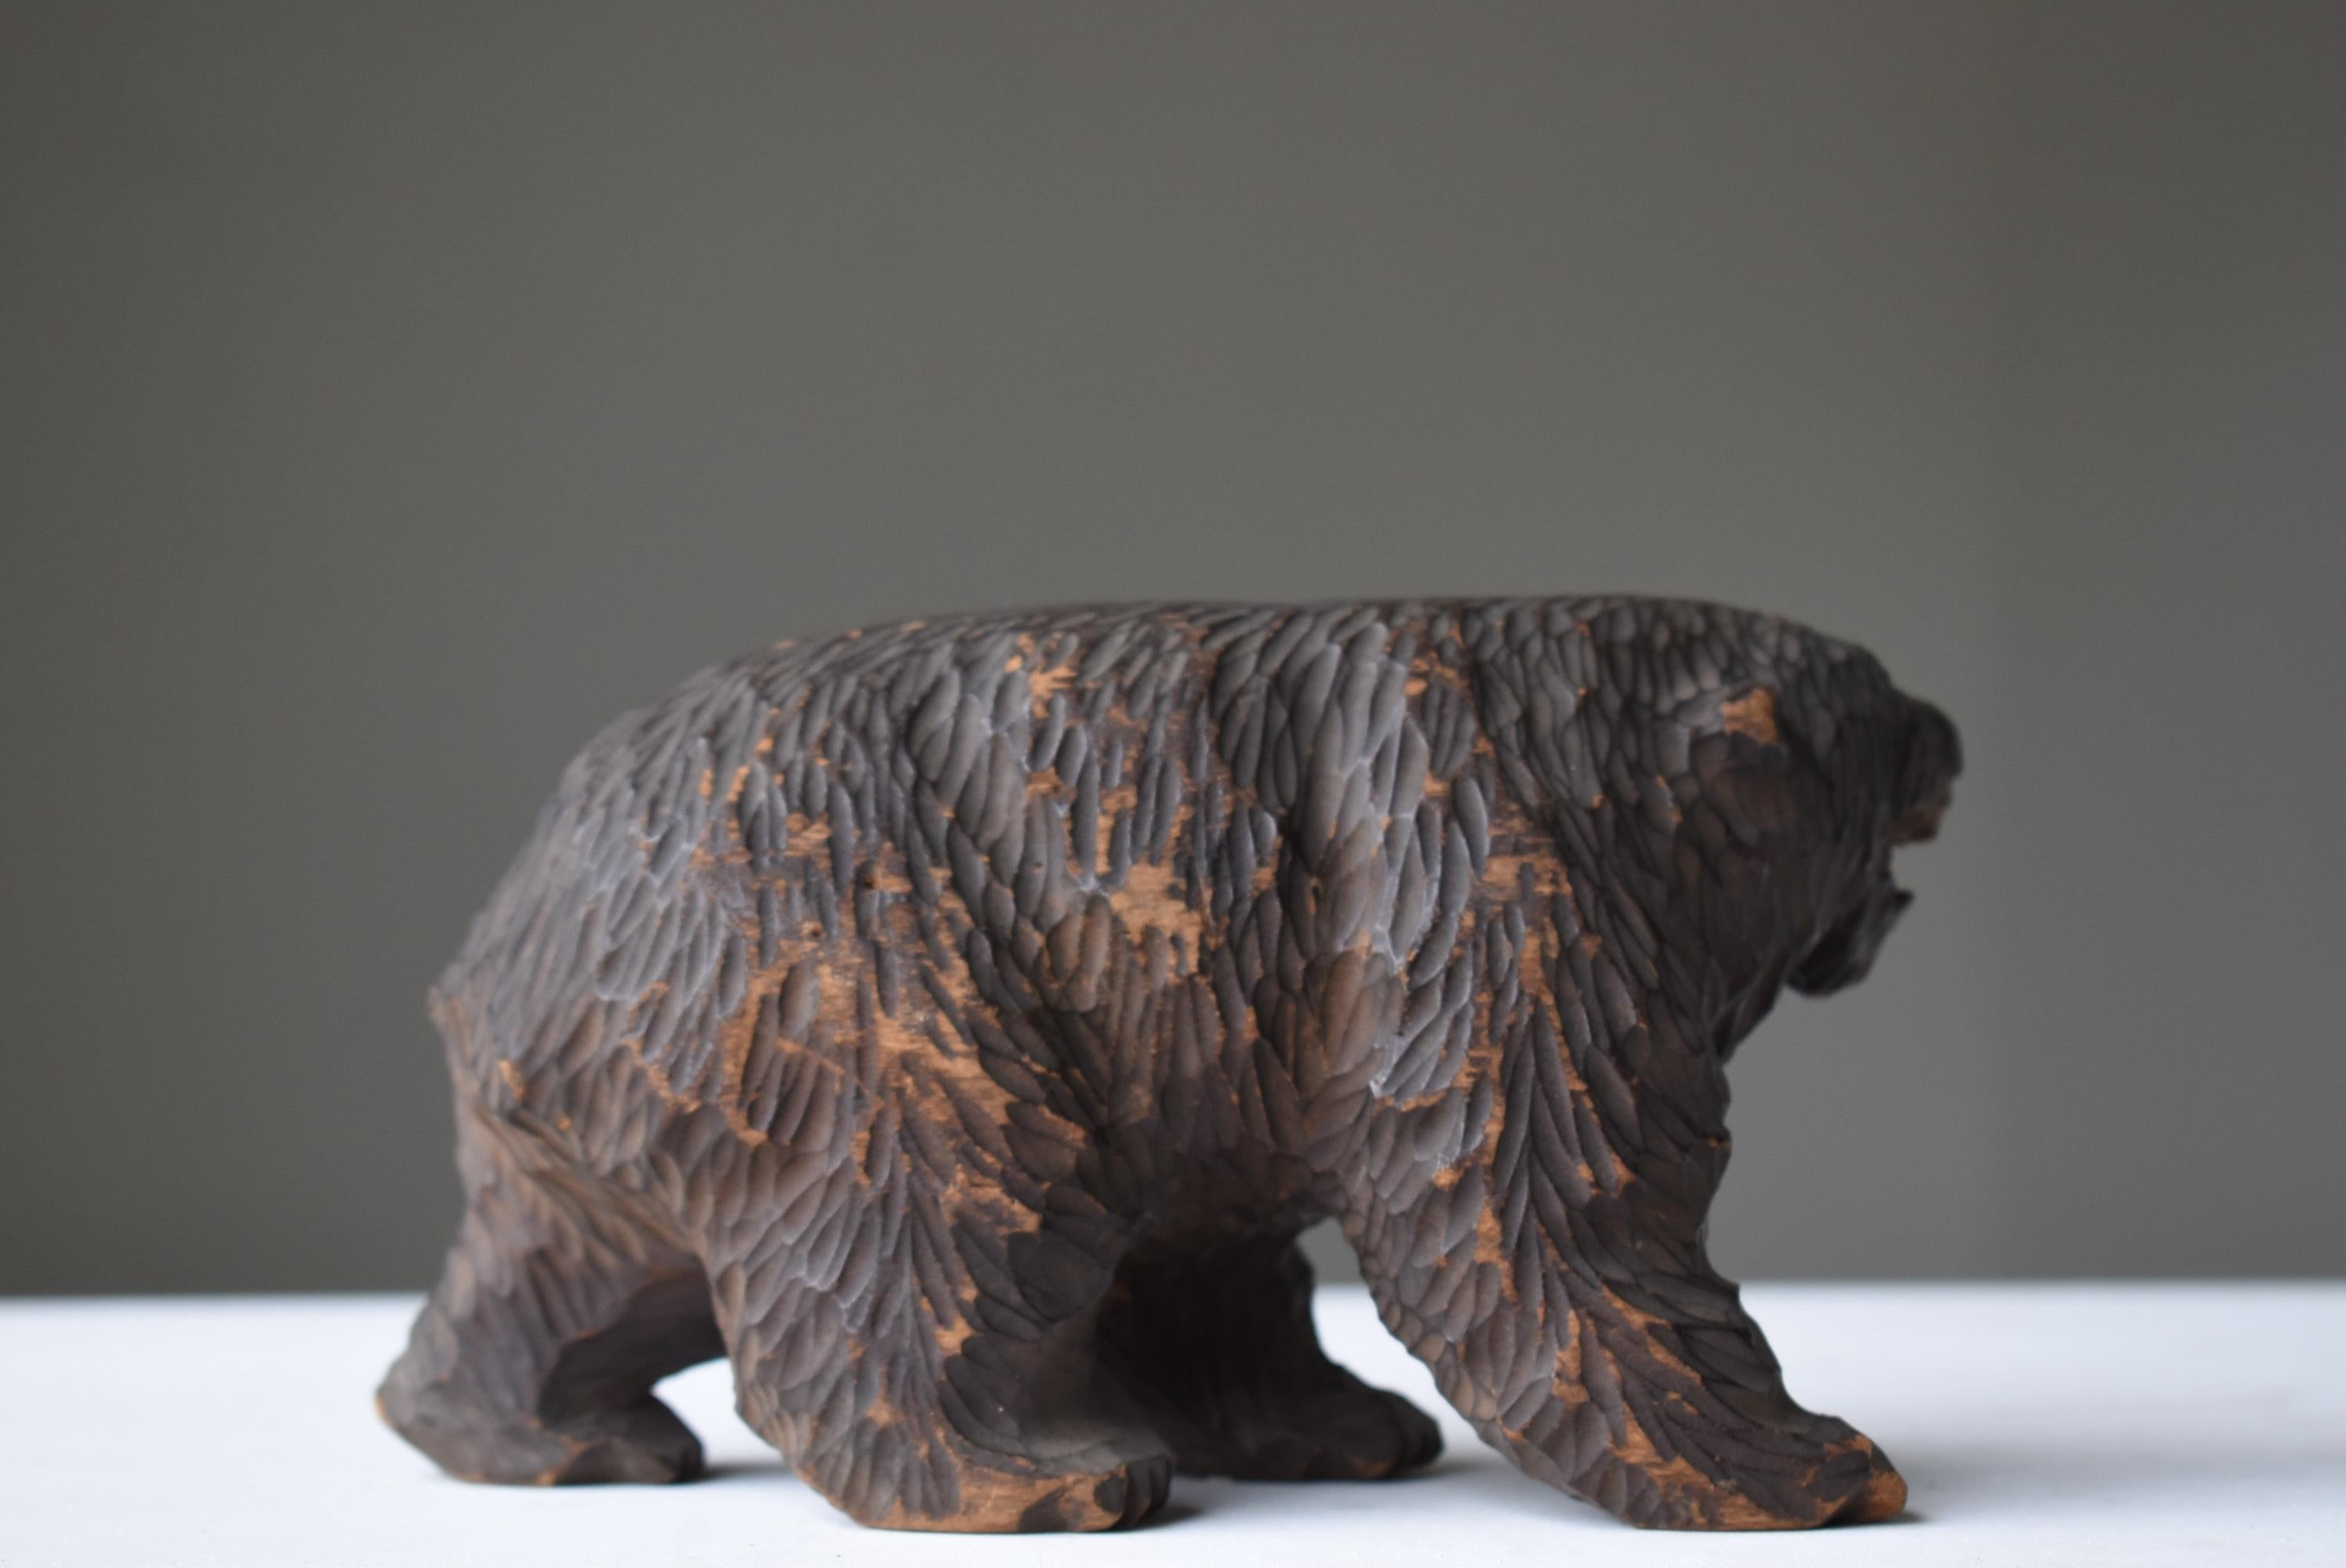 20th Century Japanese Old Wood Carving Bear 1930s-1950s/Vintage Figurine Sculpture Folk Art For Sale